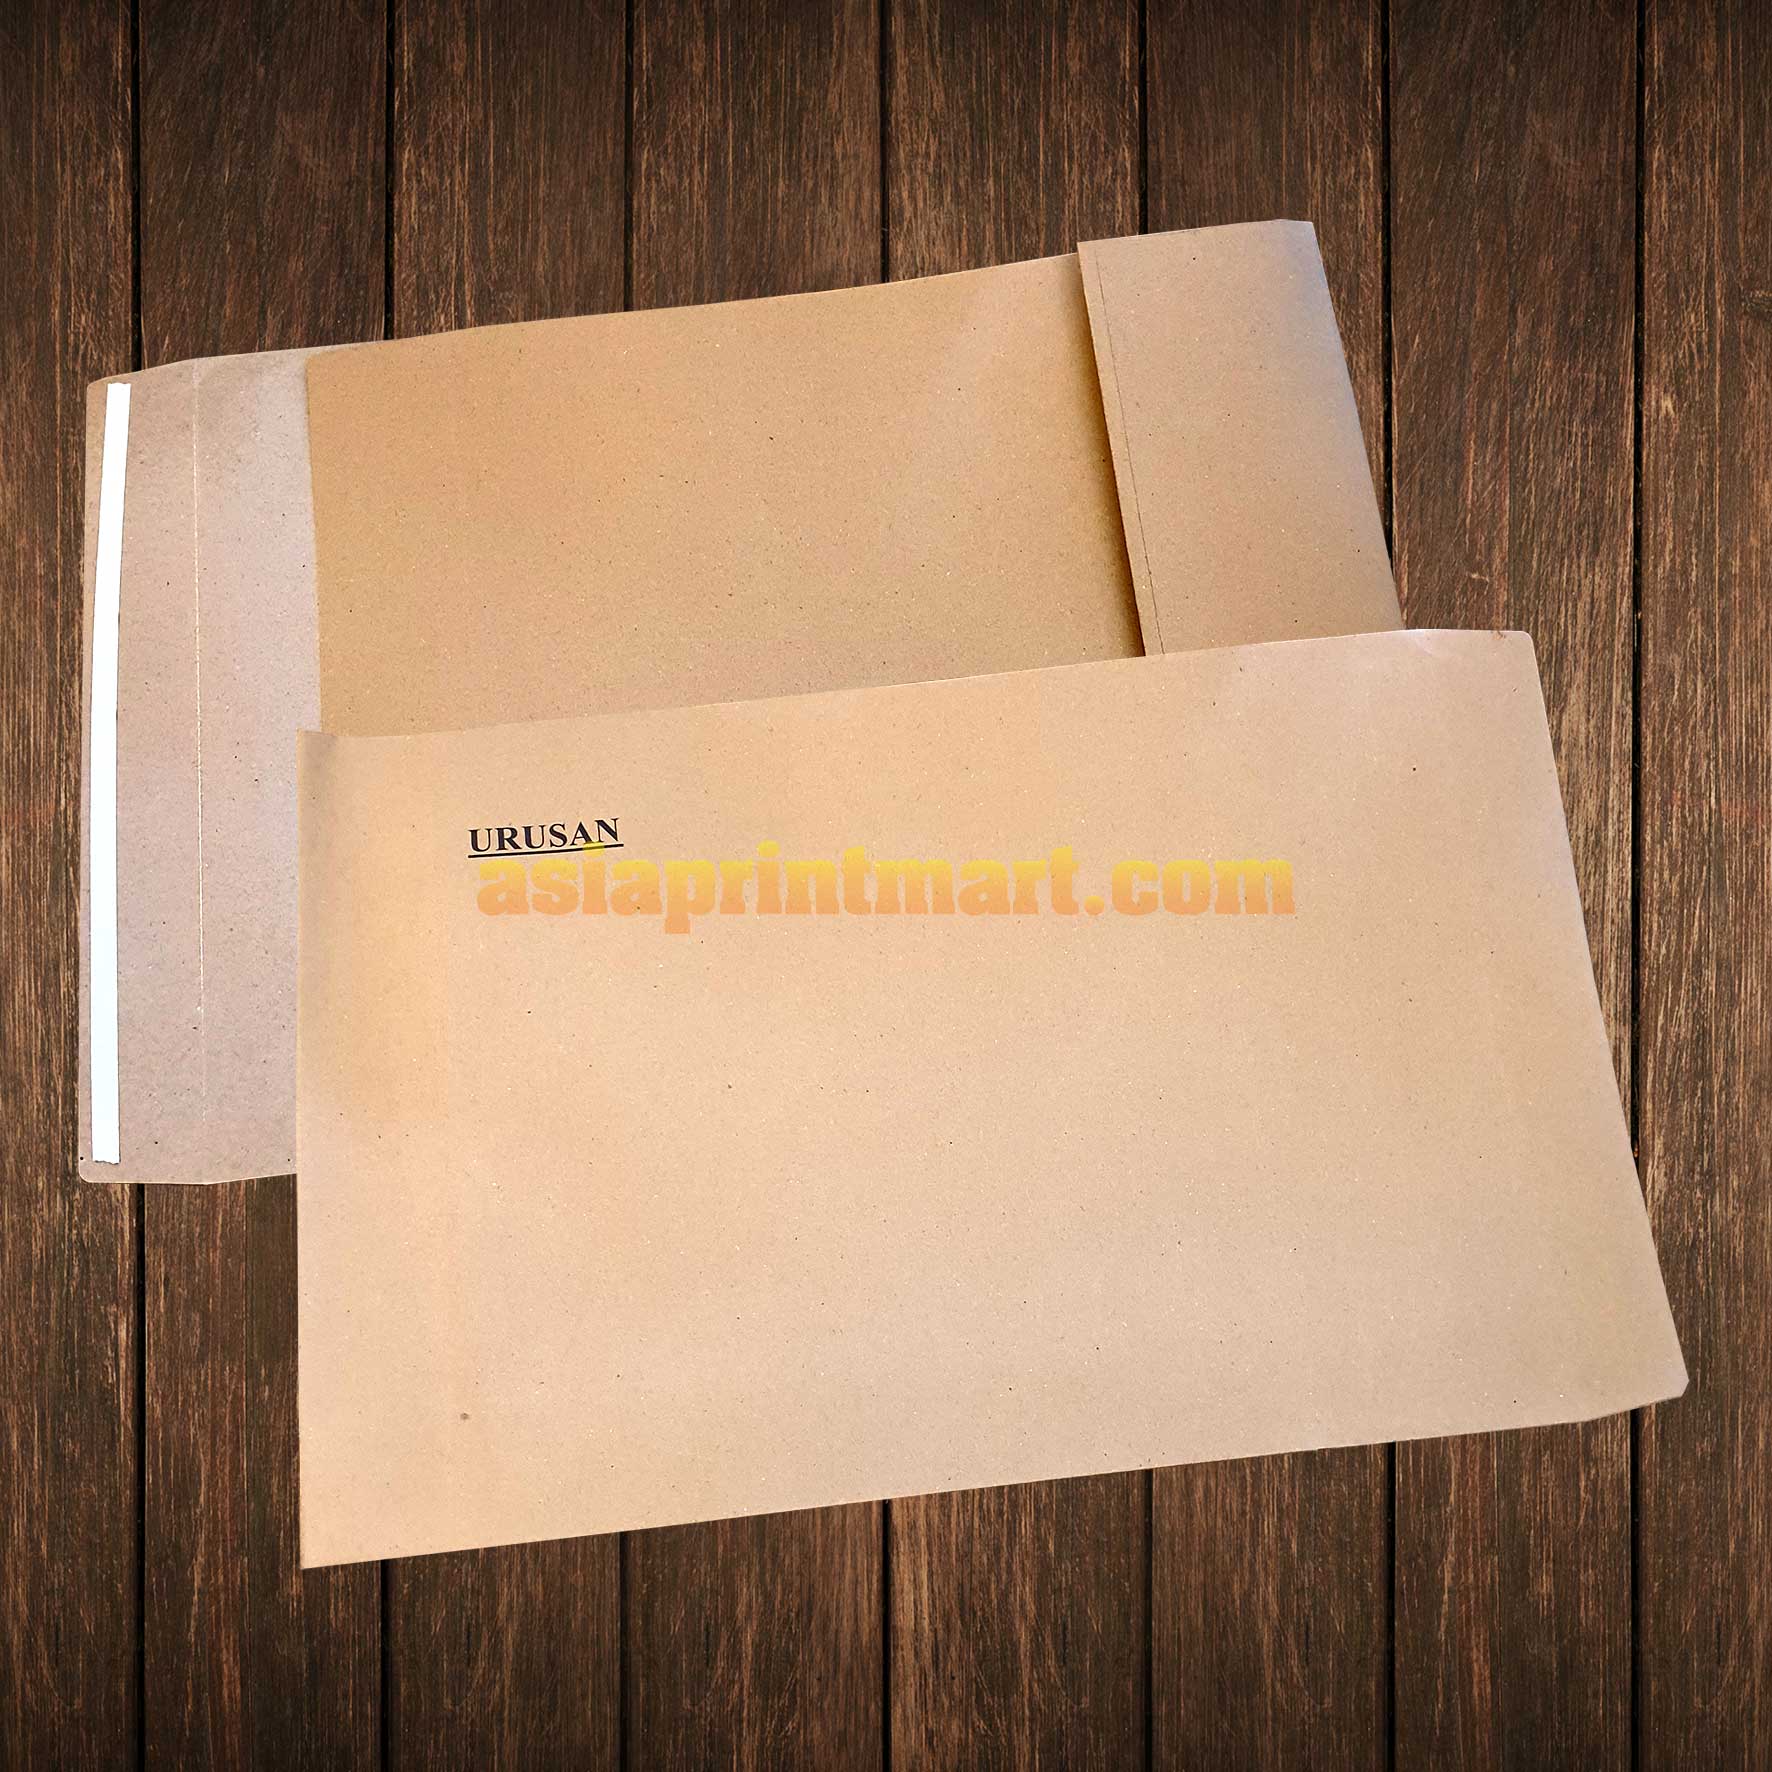 corporate folder printing | presentation folder printing services | corporate folder design | print presentation folders online